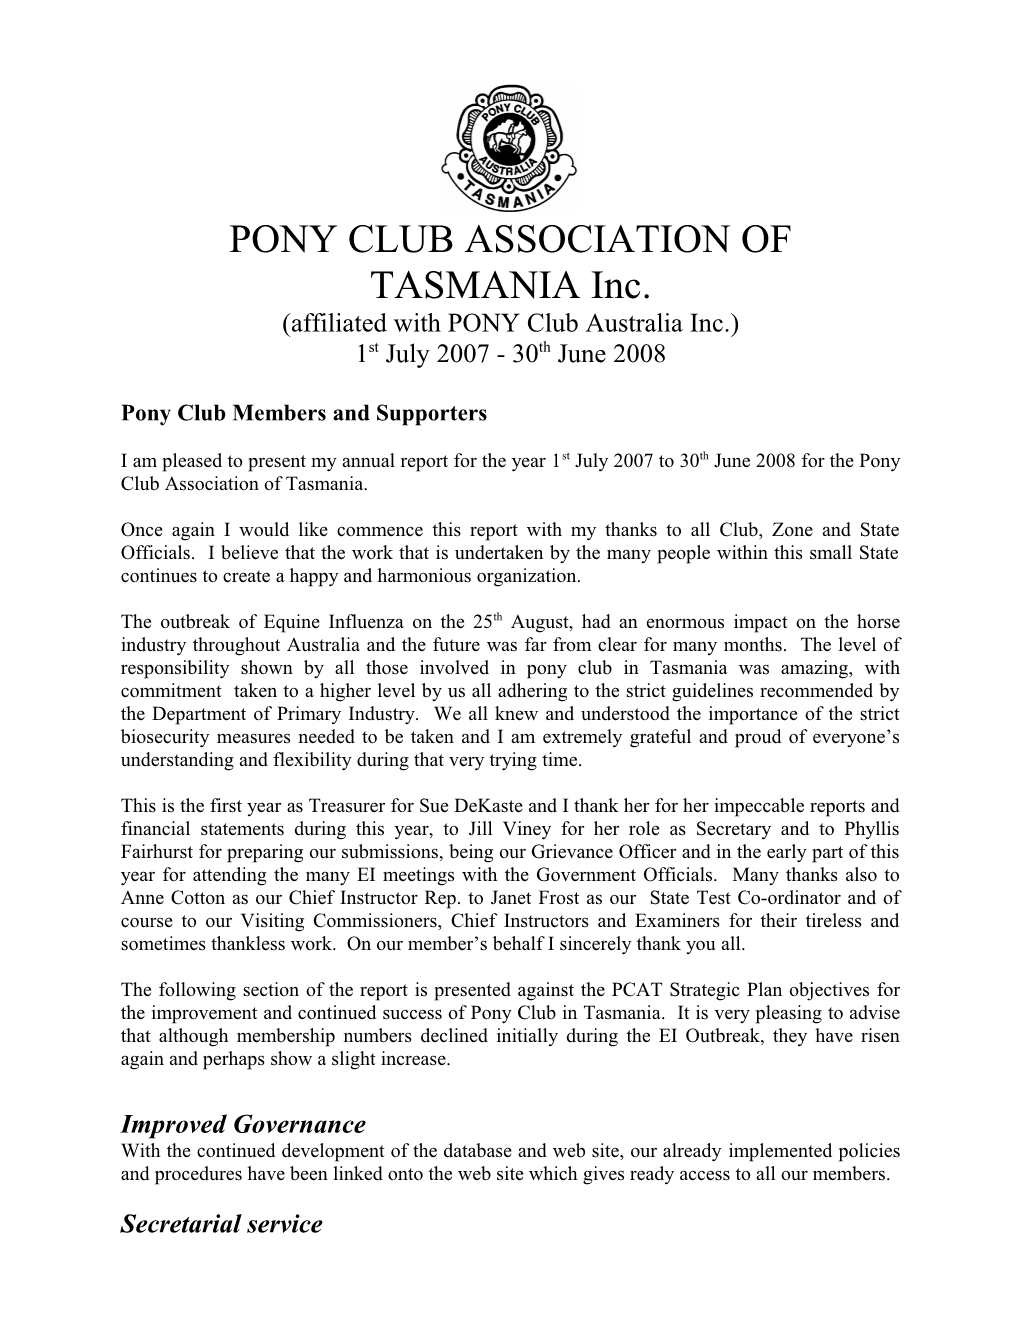 PONY CLUB ASSOCIATION of TASMANIA Inc